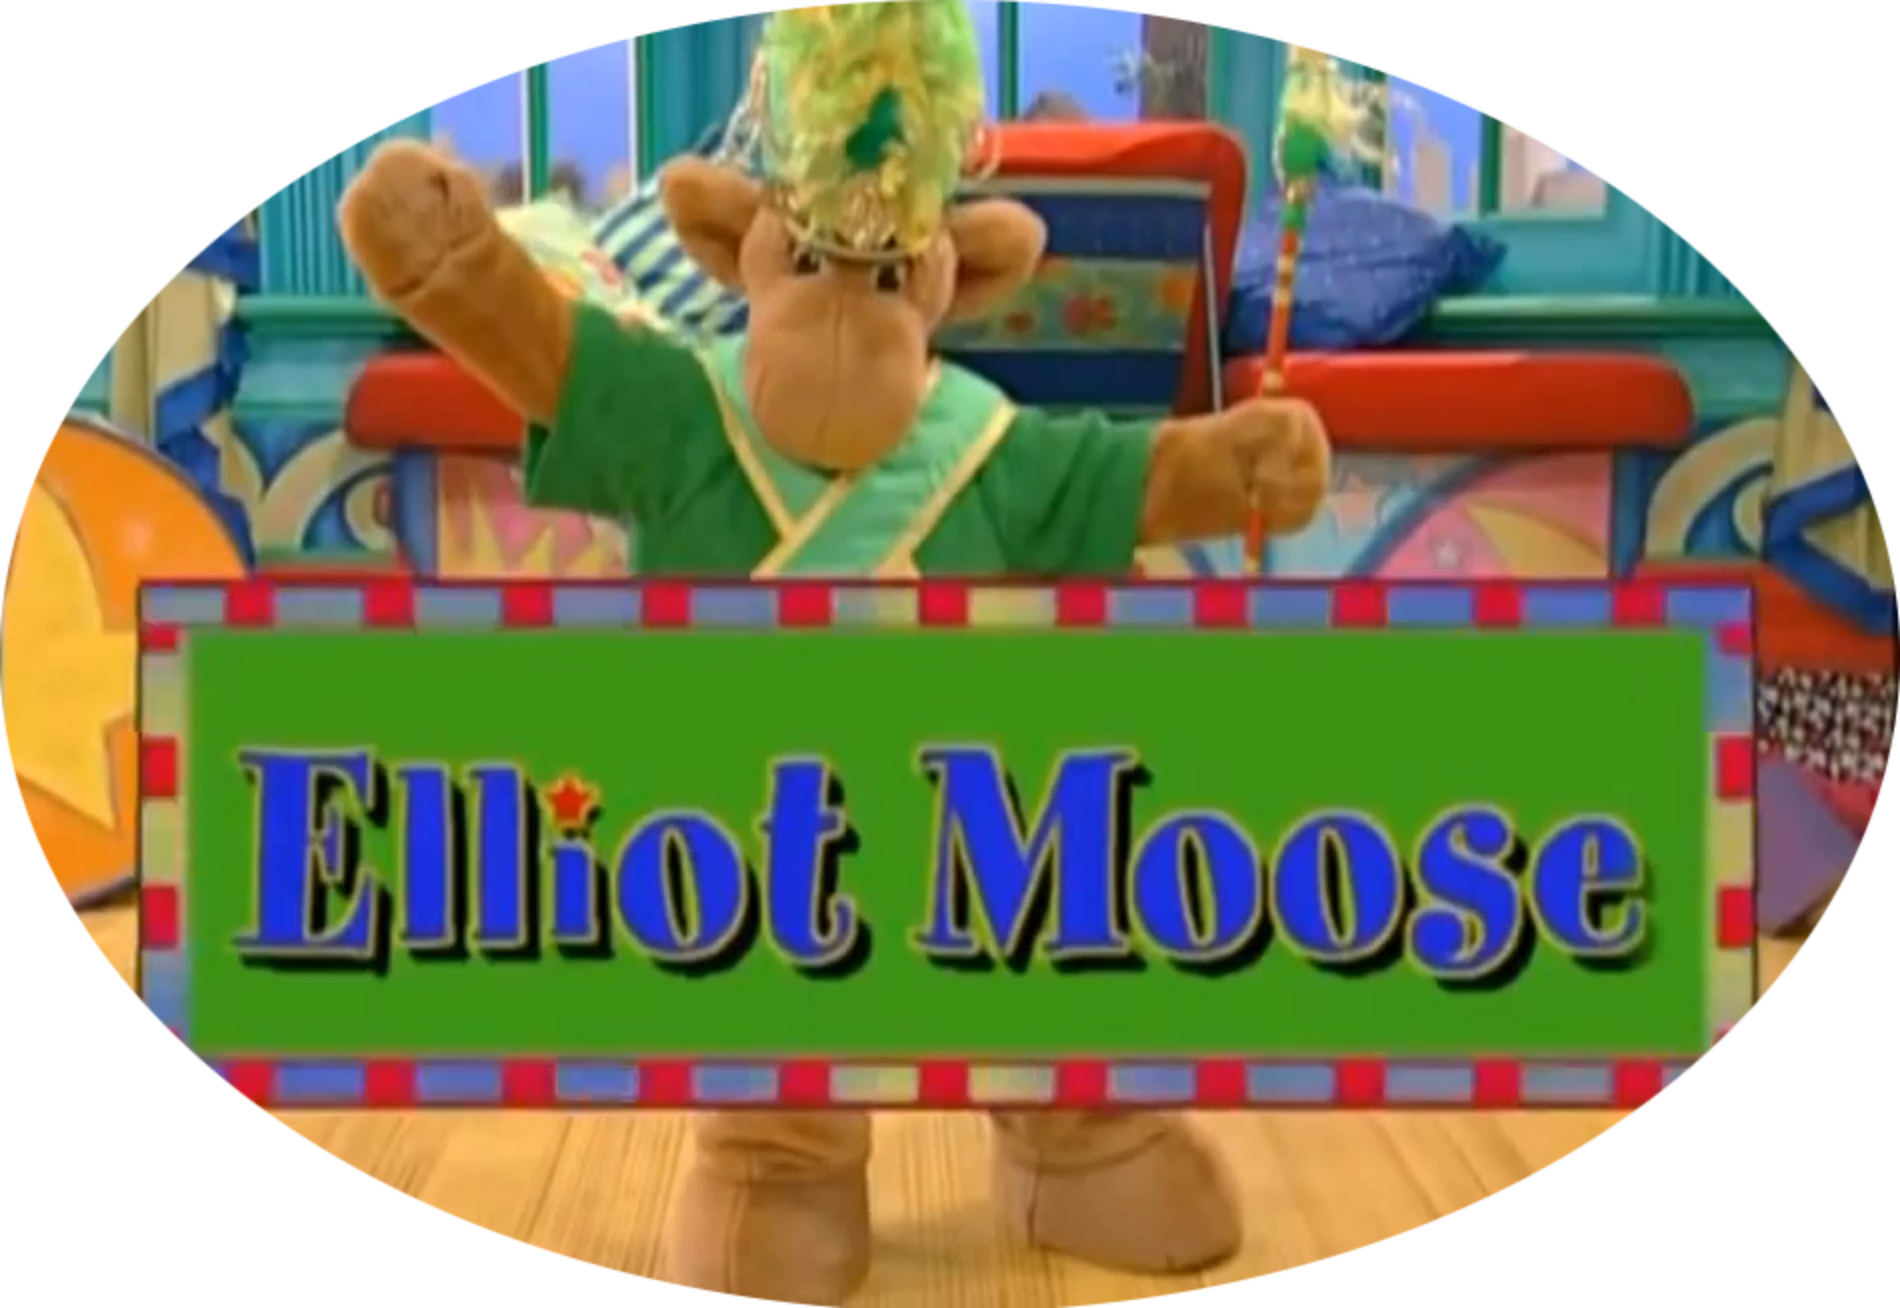 Elliot Moose 